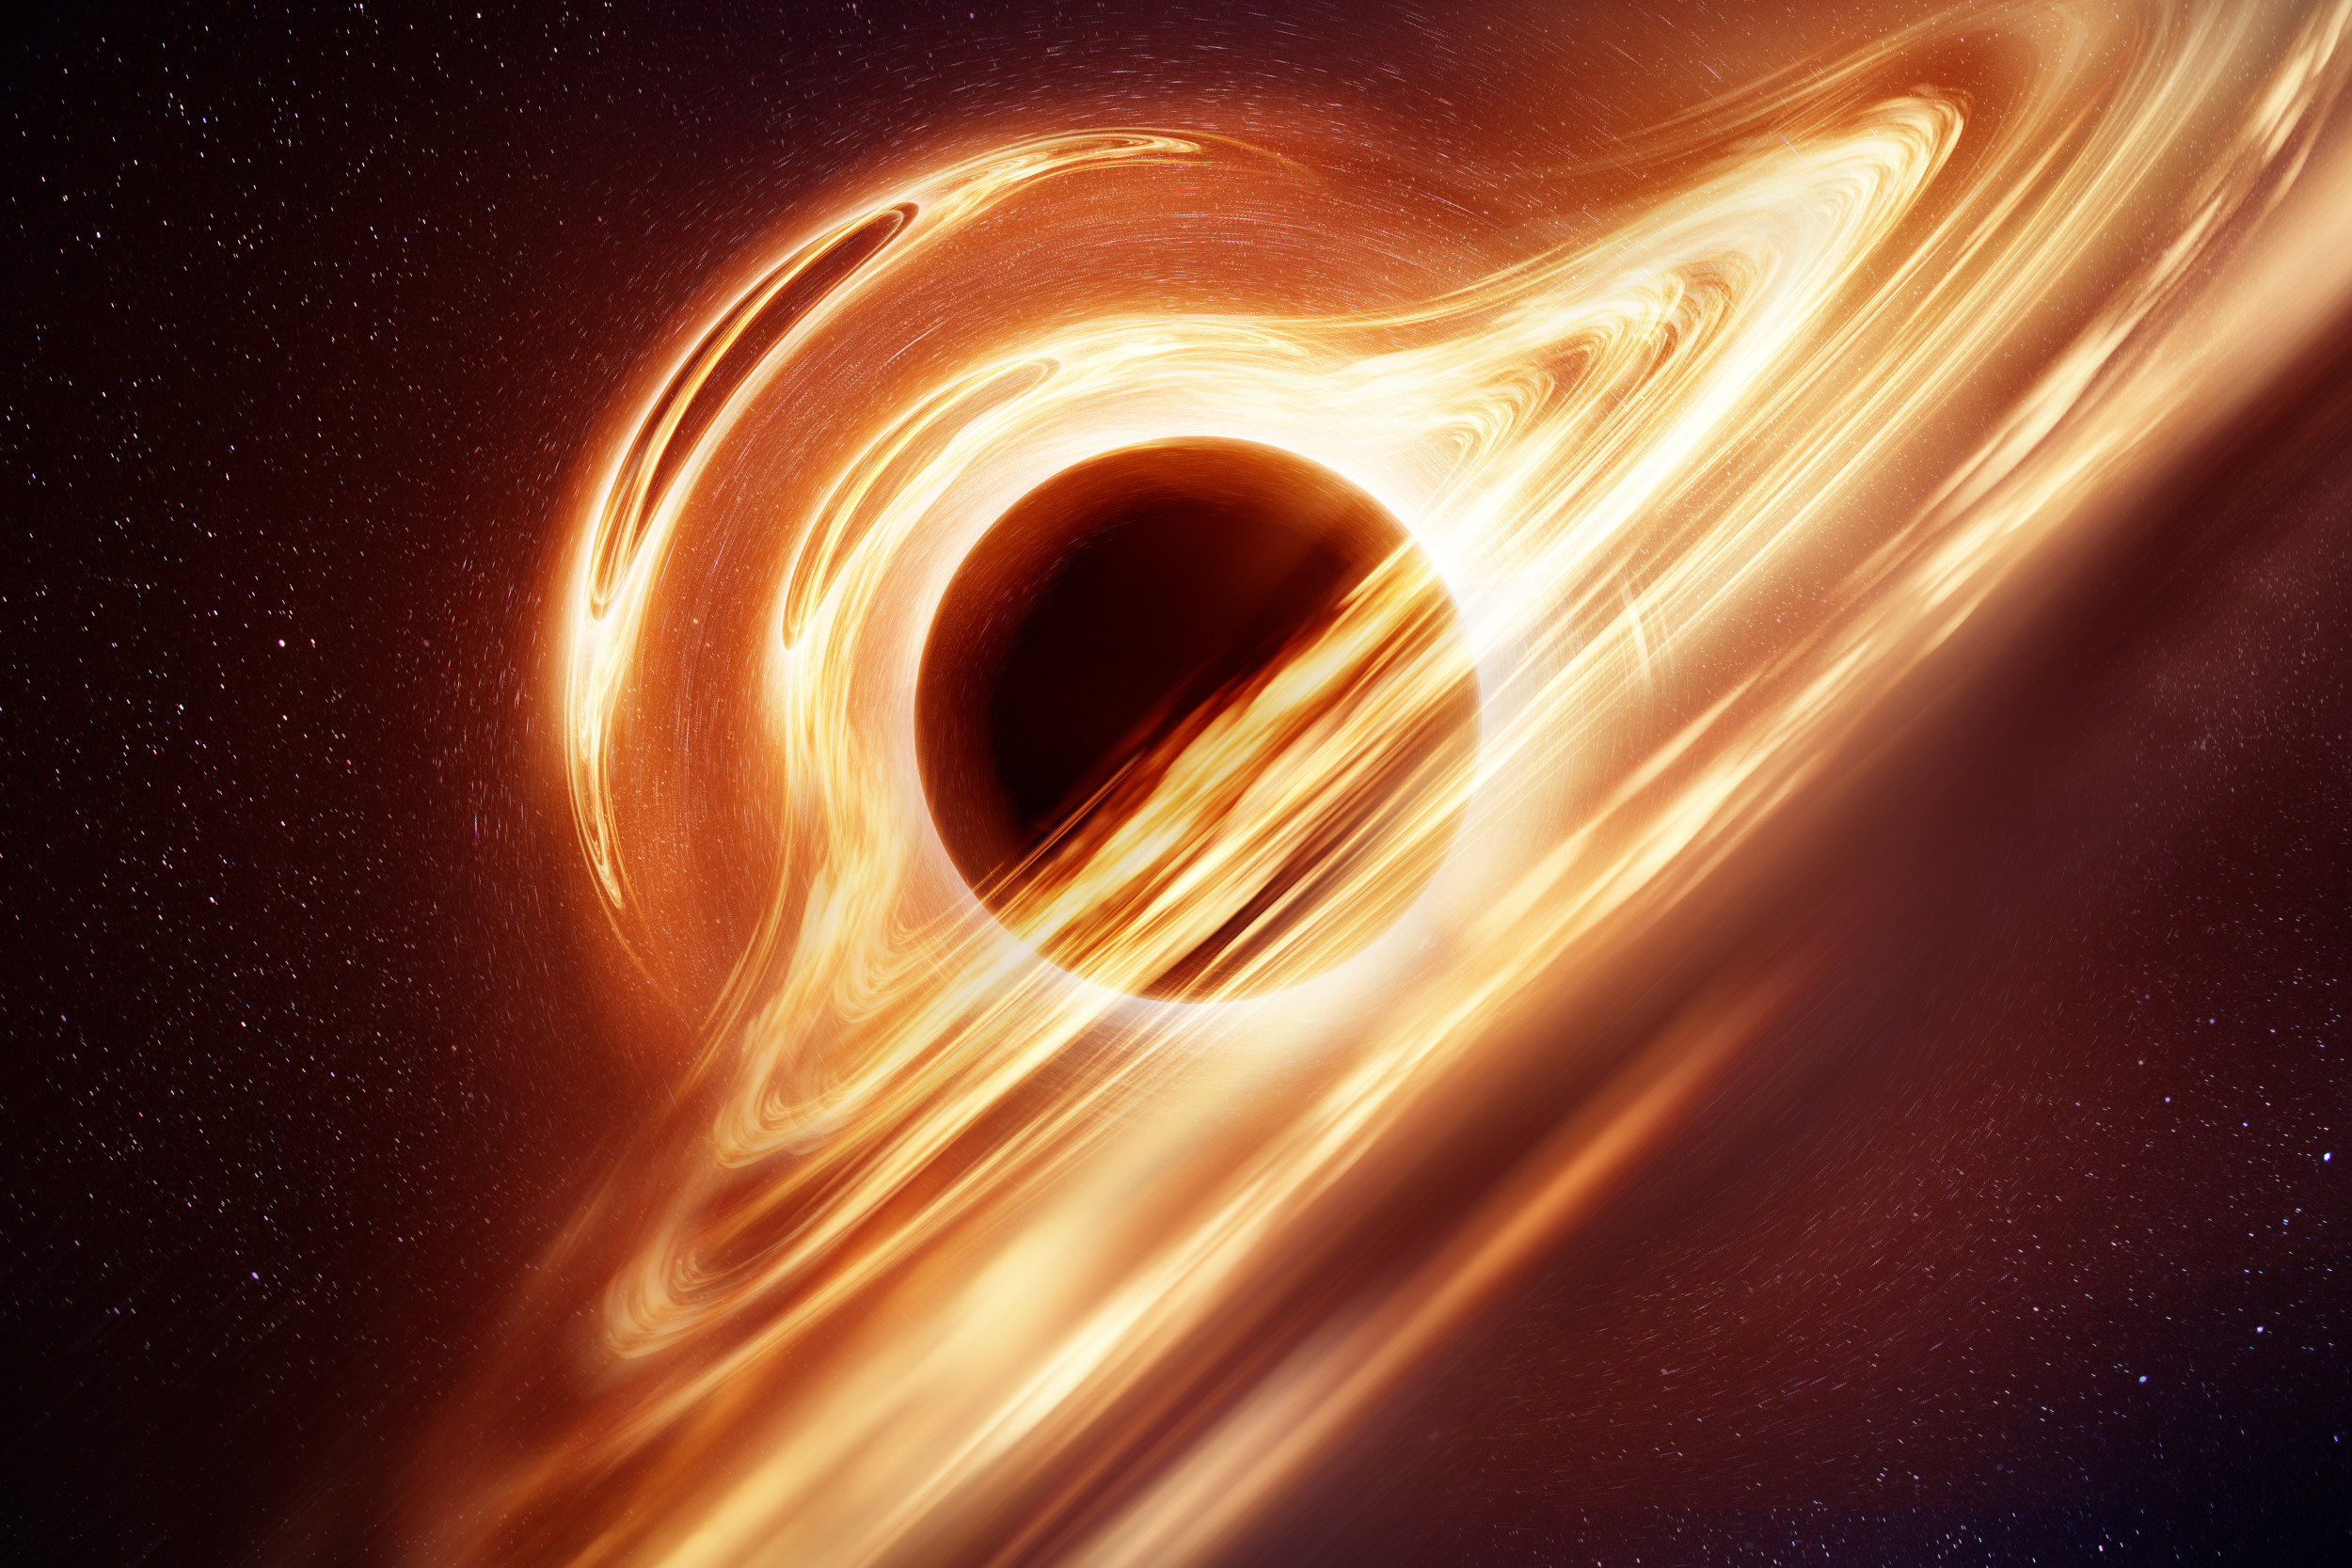 Einstein Proven Right on Black Holes